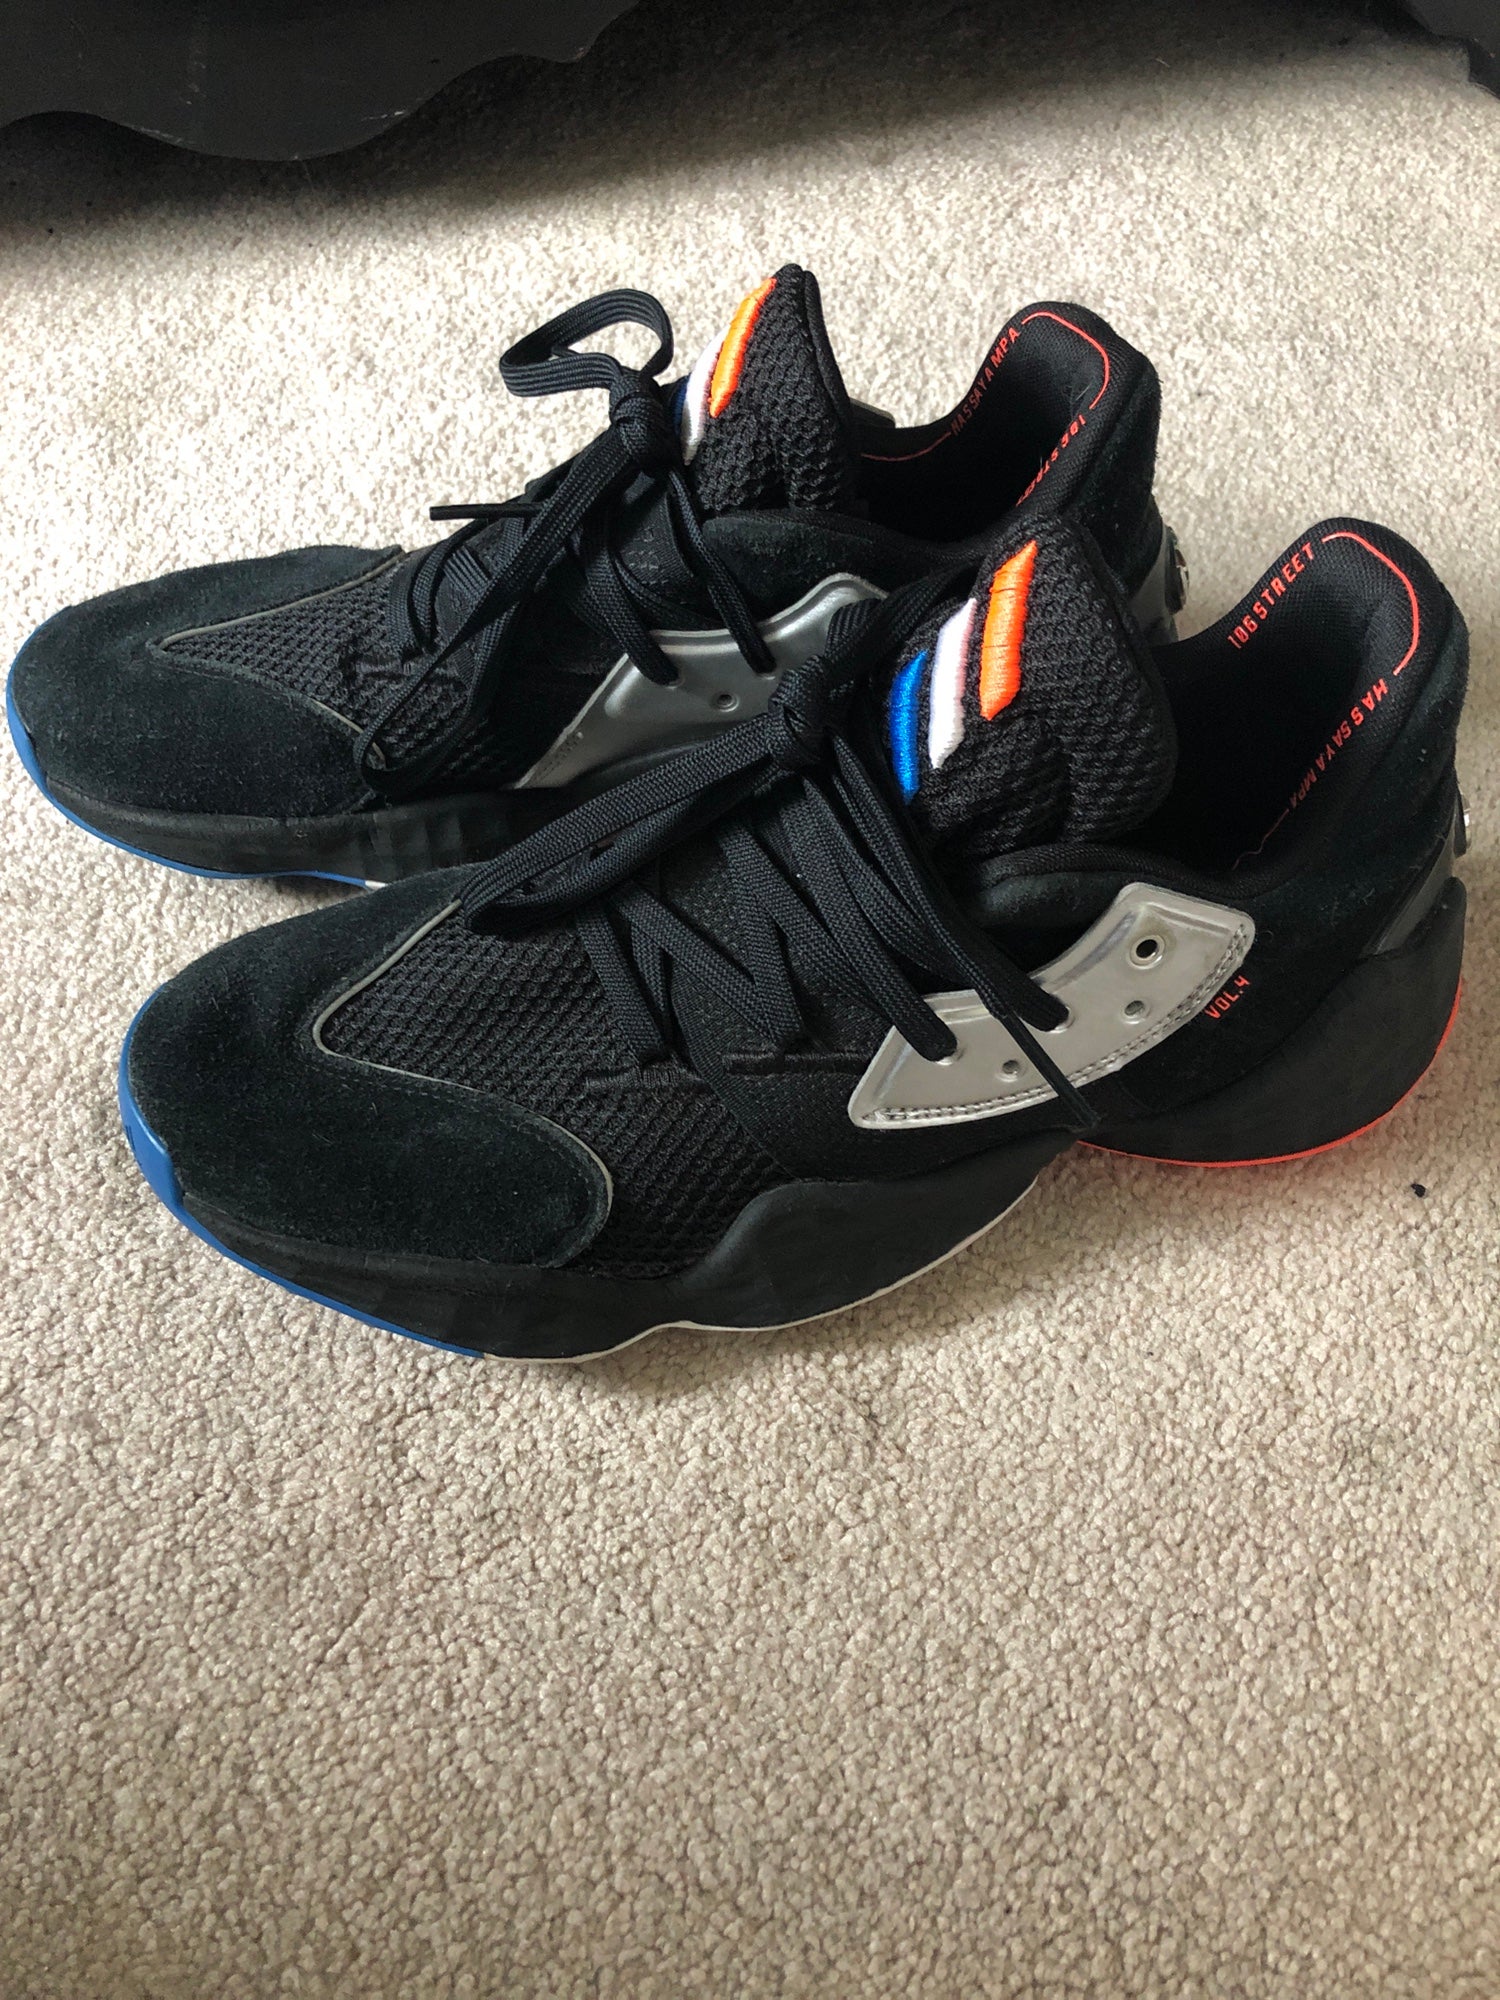 Adidas James Harden Vol 4 RED CORE BLACK Basketball Shoes DS Men Sz 8.5  EF0999